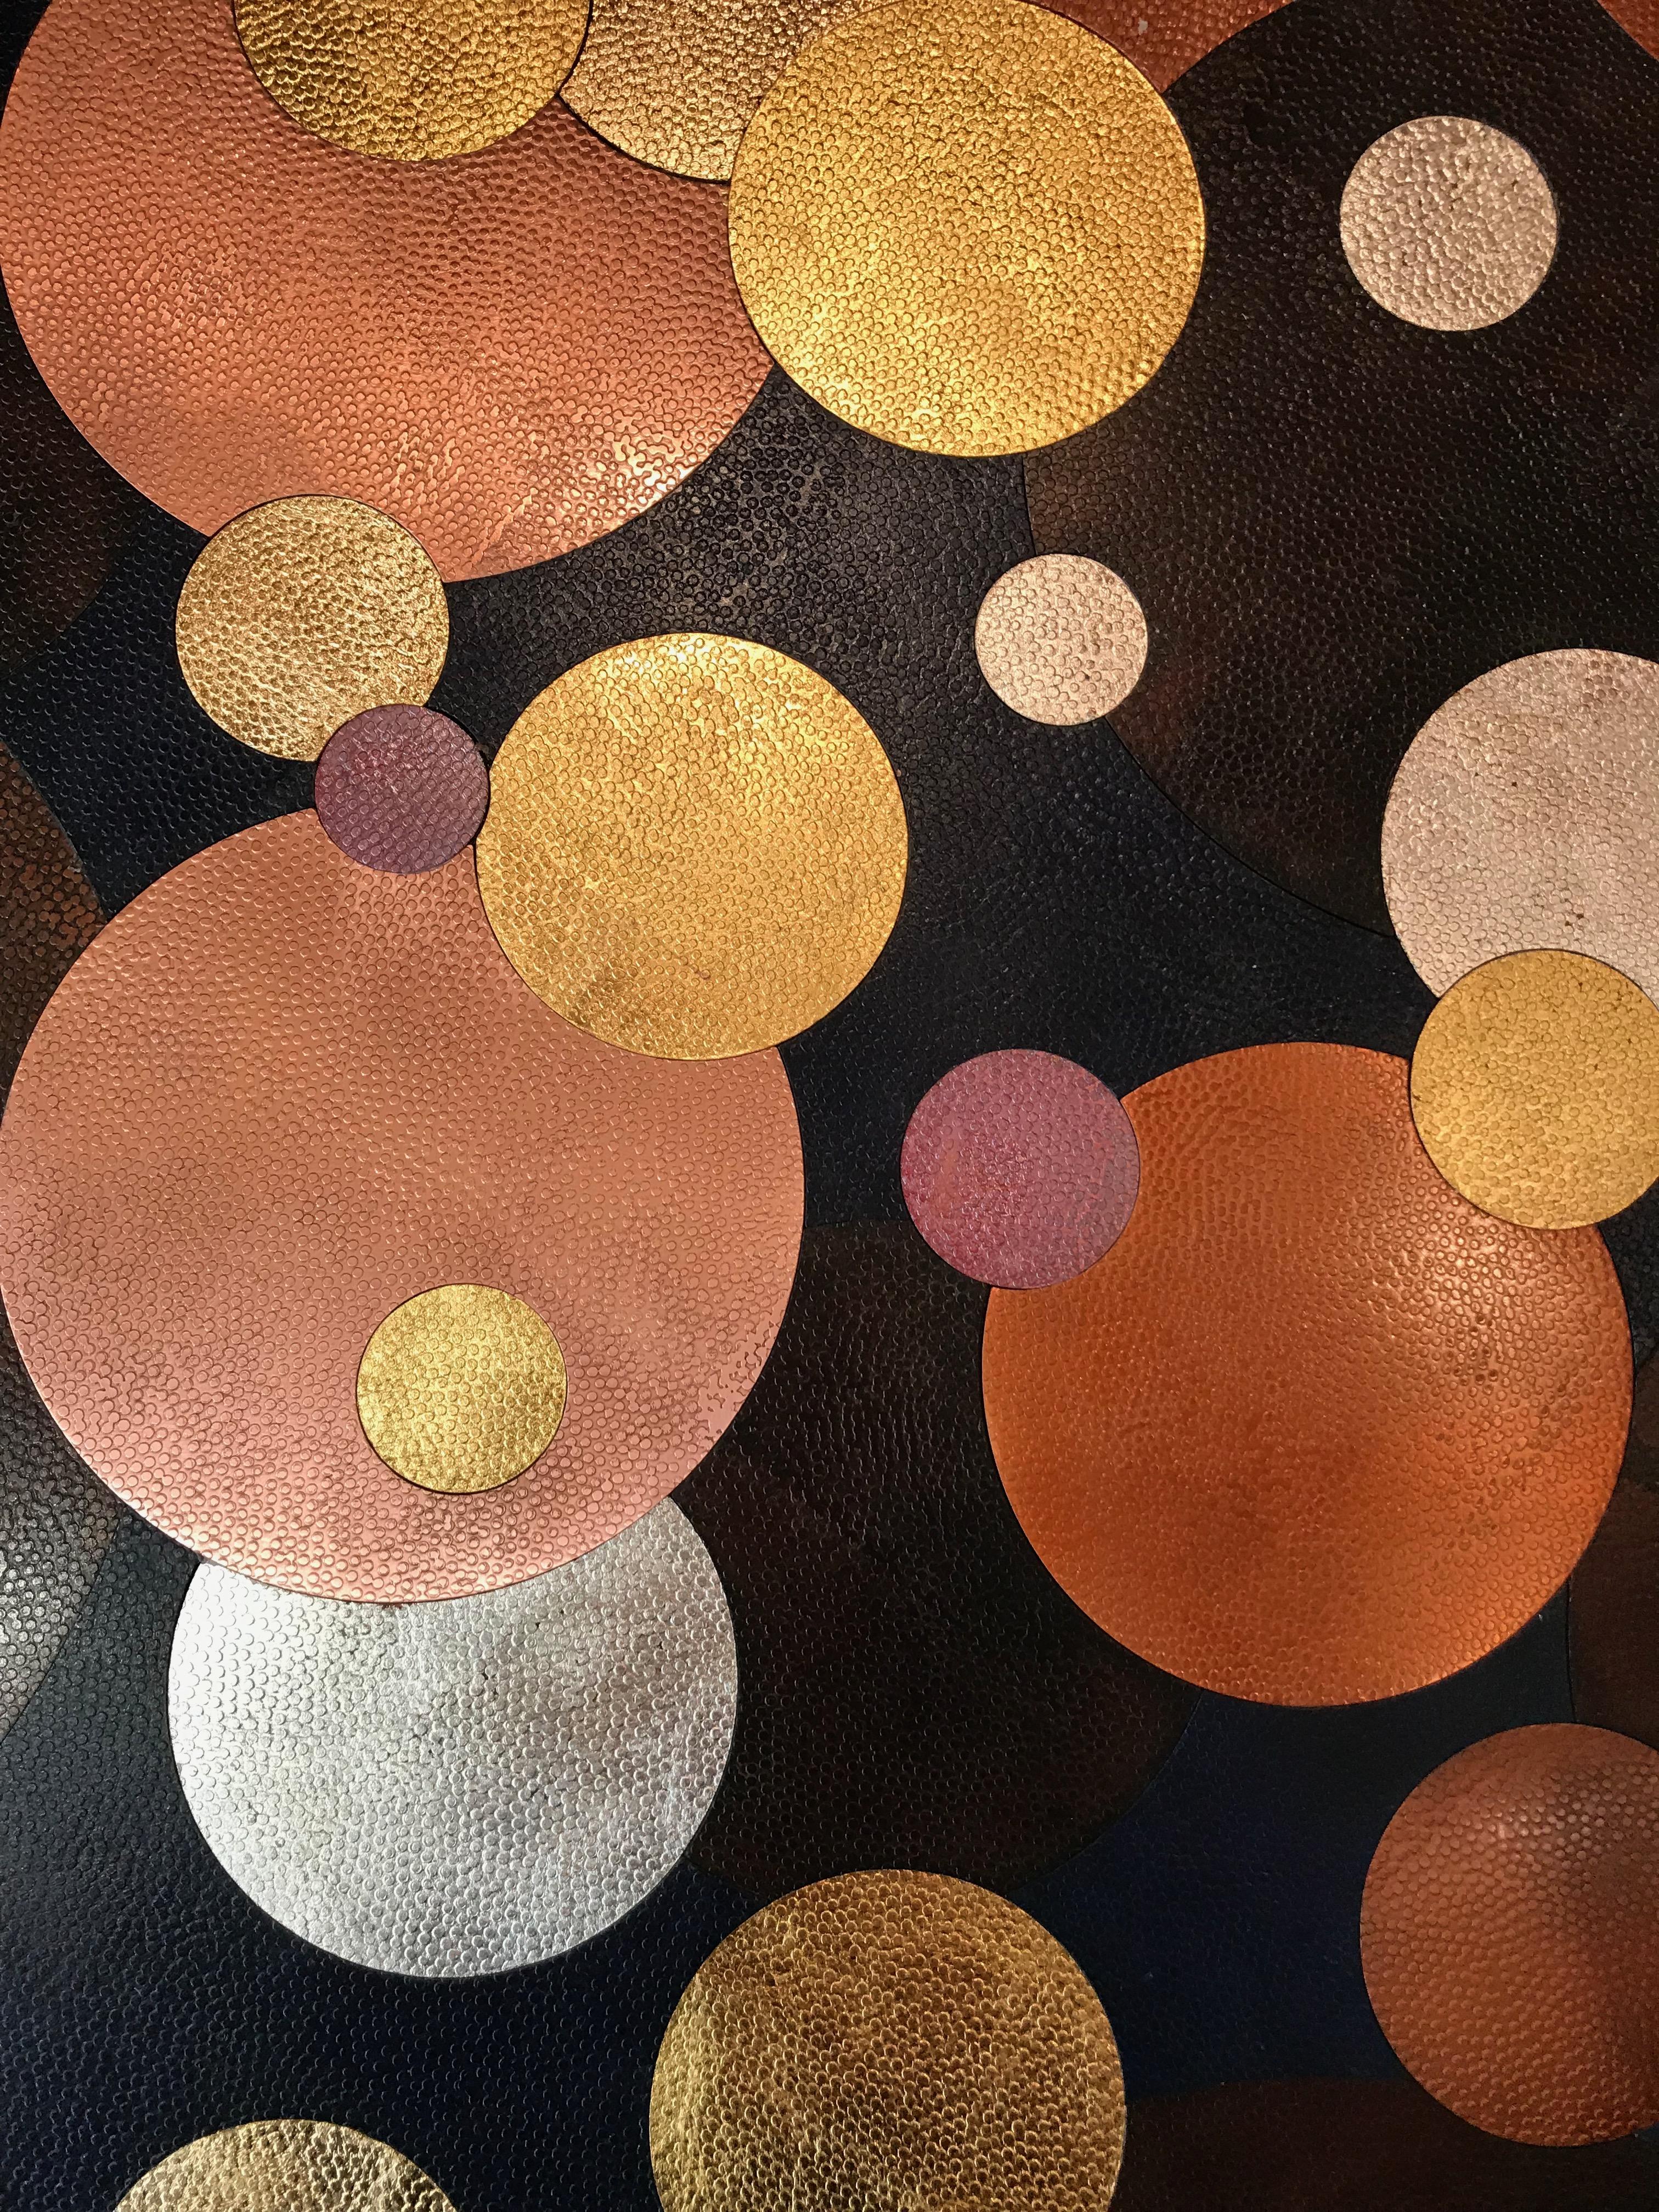 Nathanaël Le Berre 2019, Unique Hammerd Copper Table Al'inbïq 10